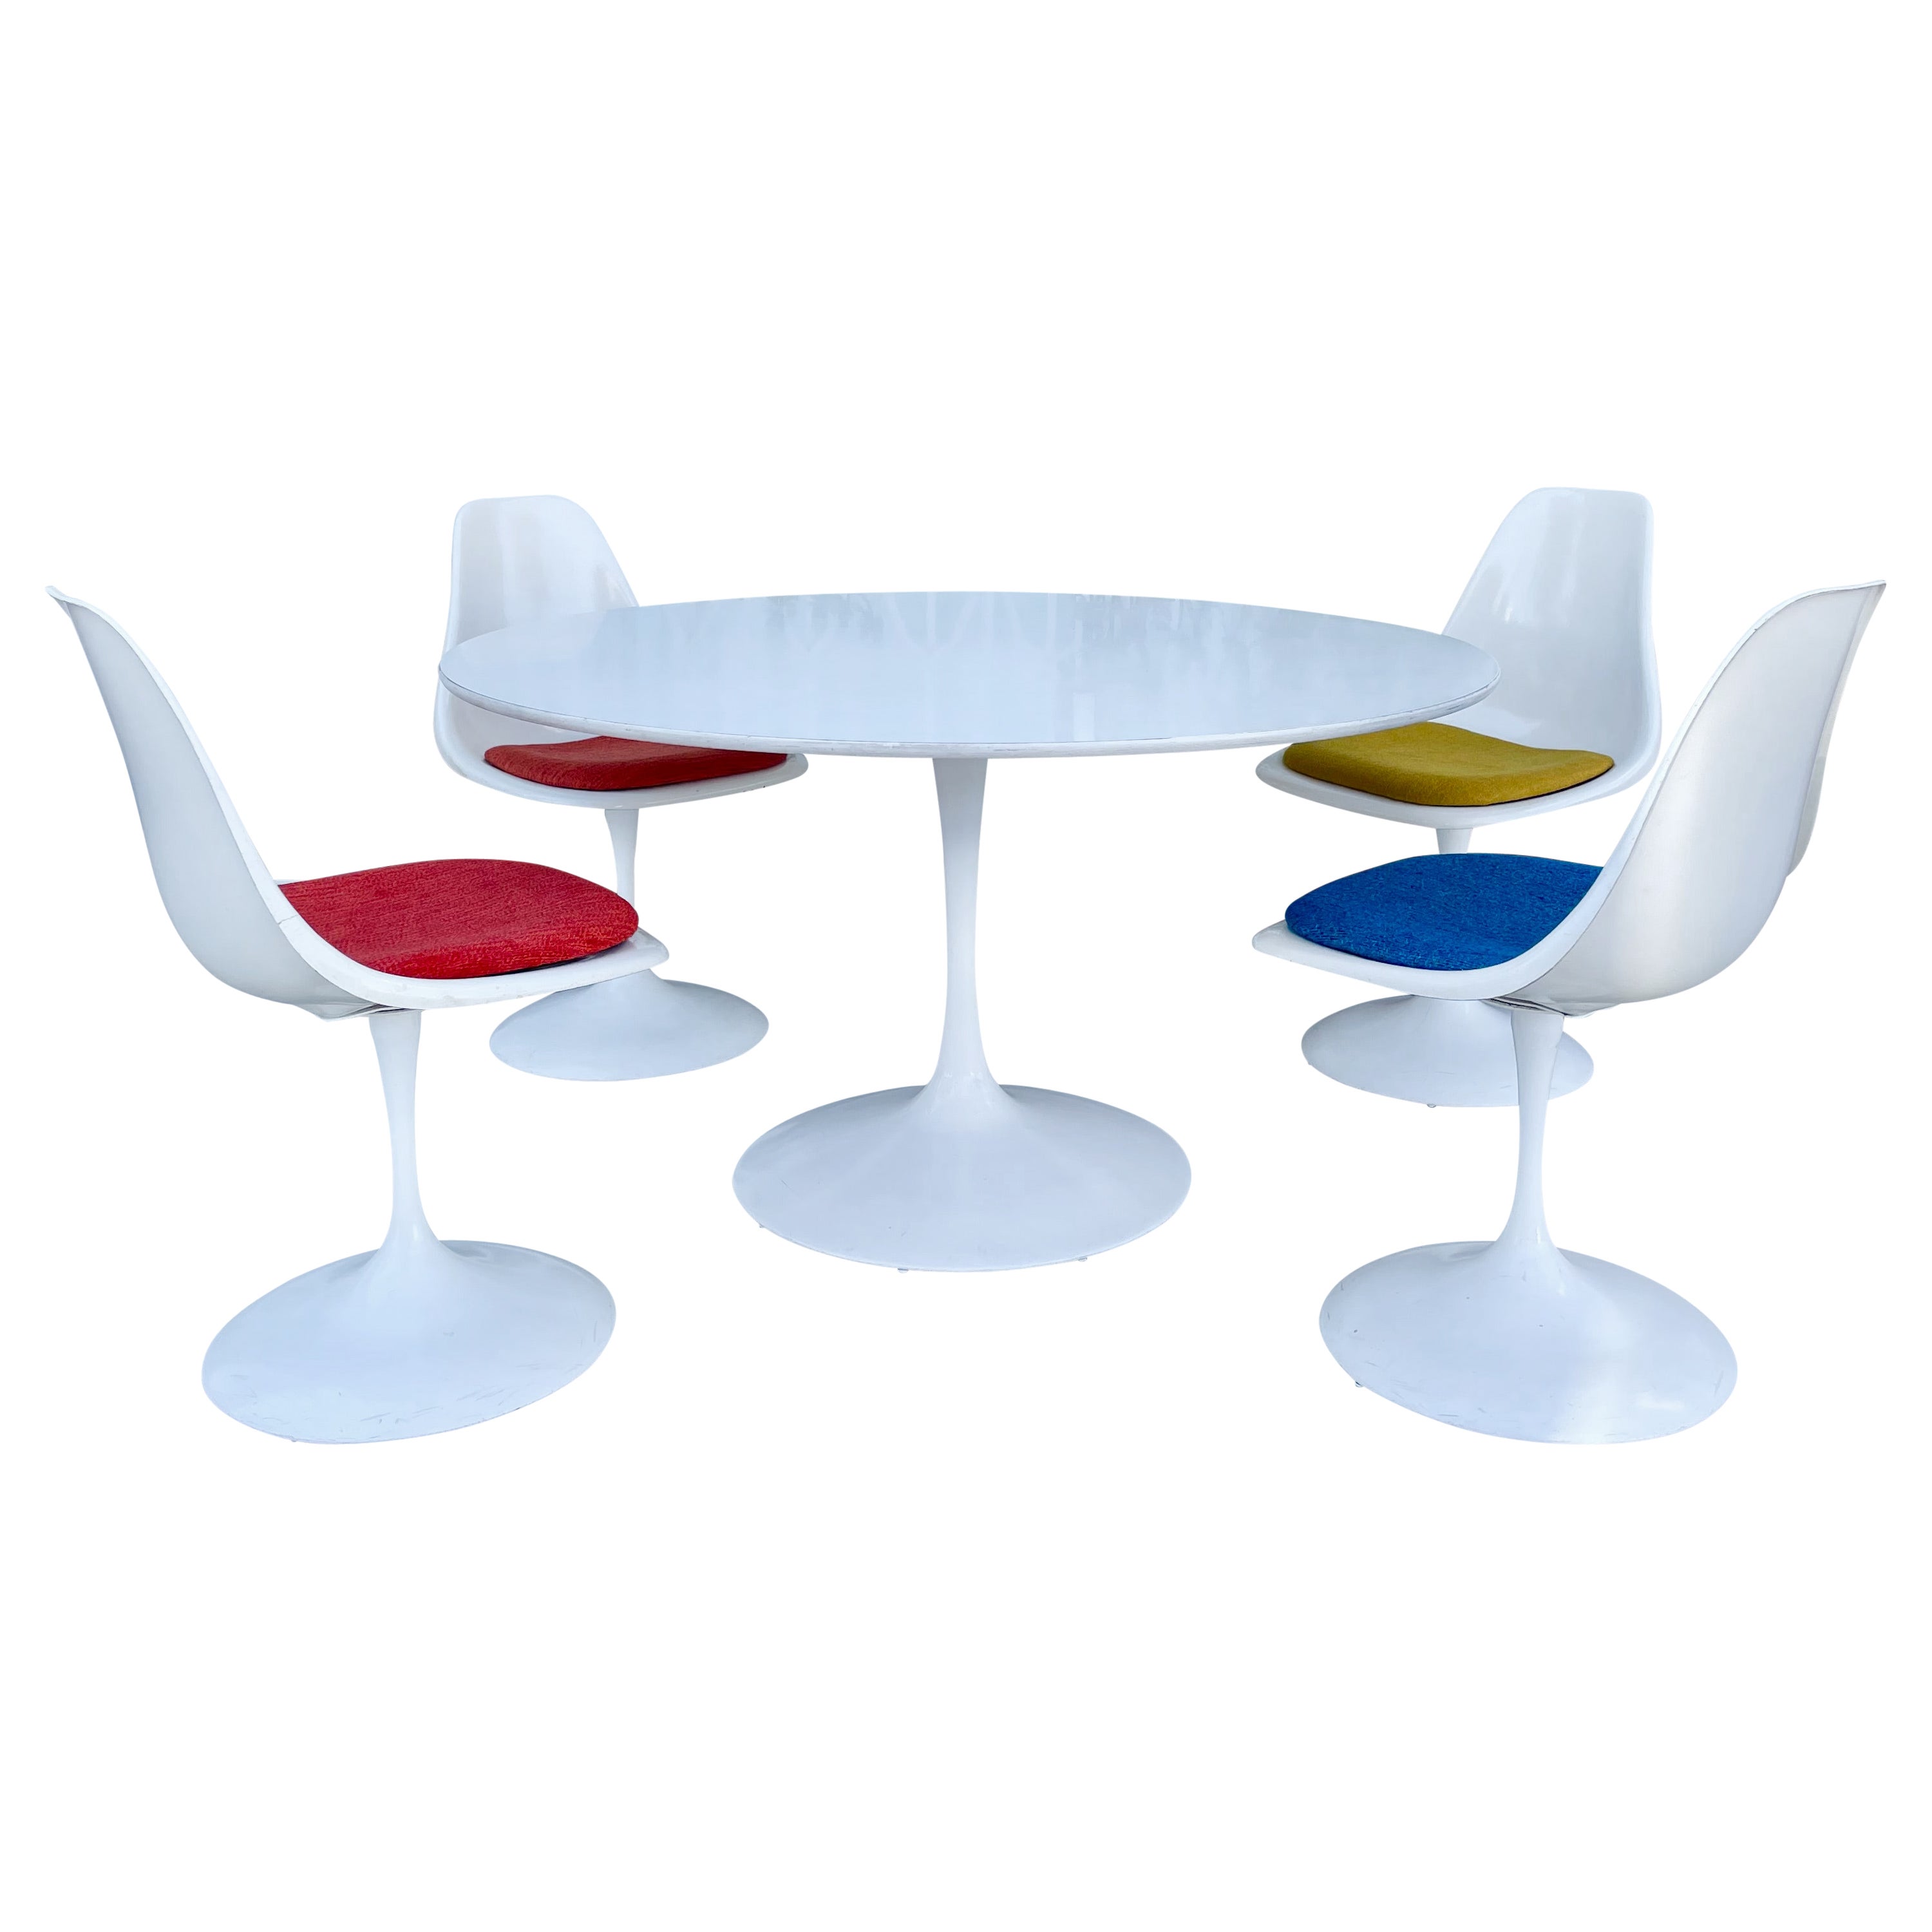 Midcentury Tulip Dining Table Set Styled After Eero Saarinen